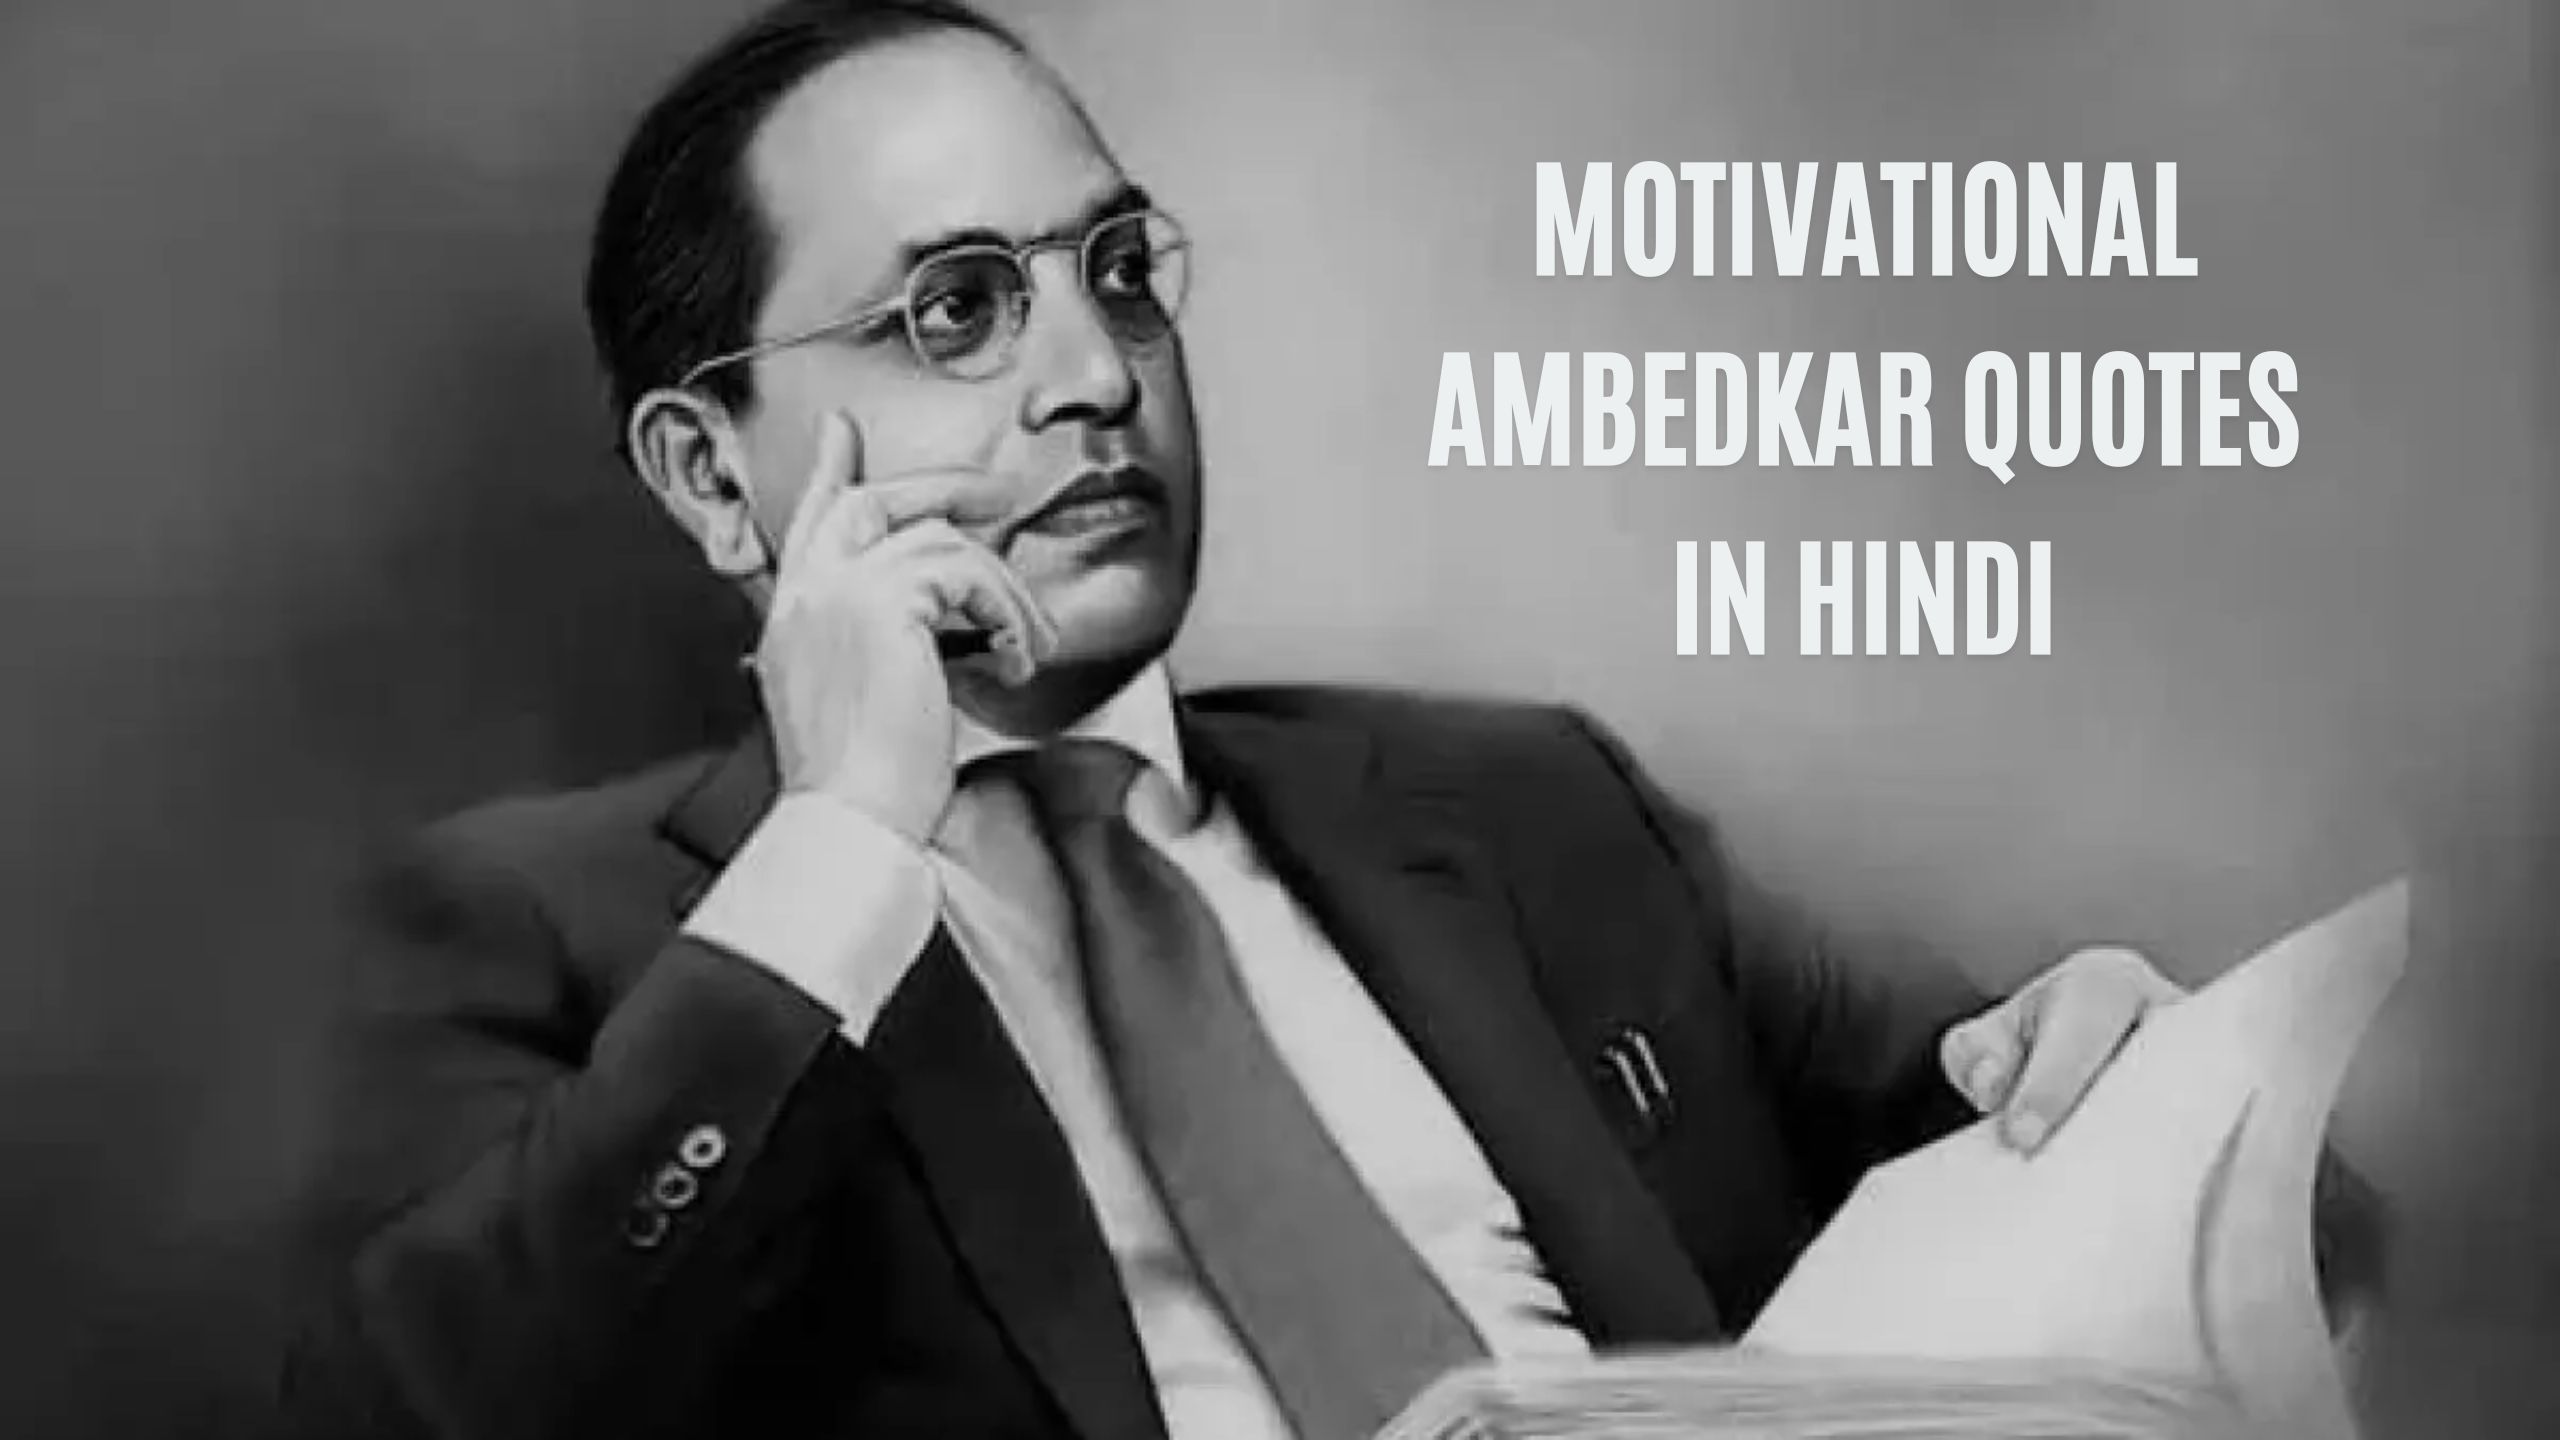 Motivational Ambedkar Quotes in Hindi